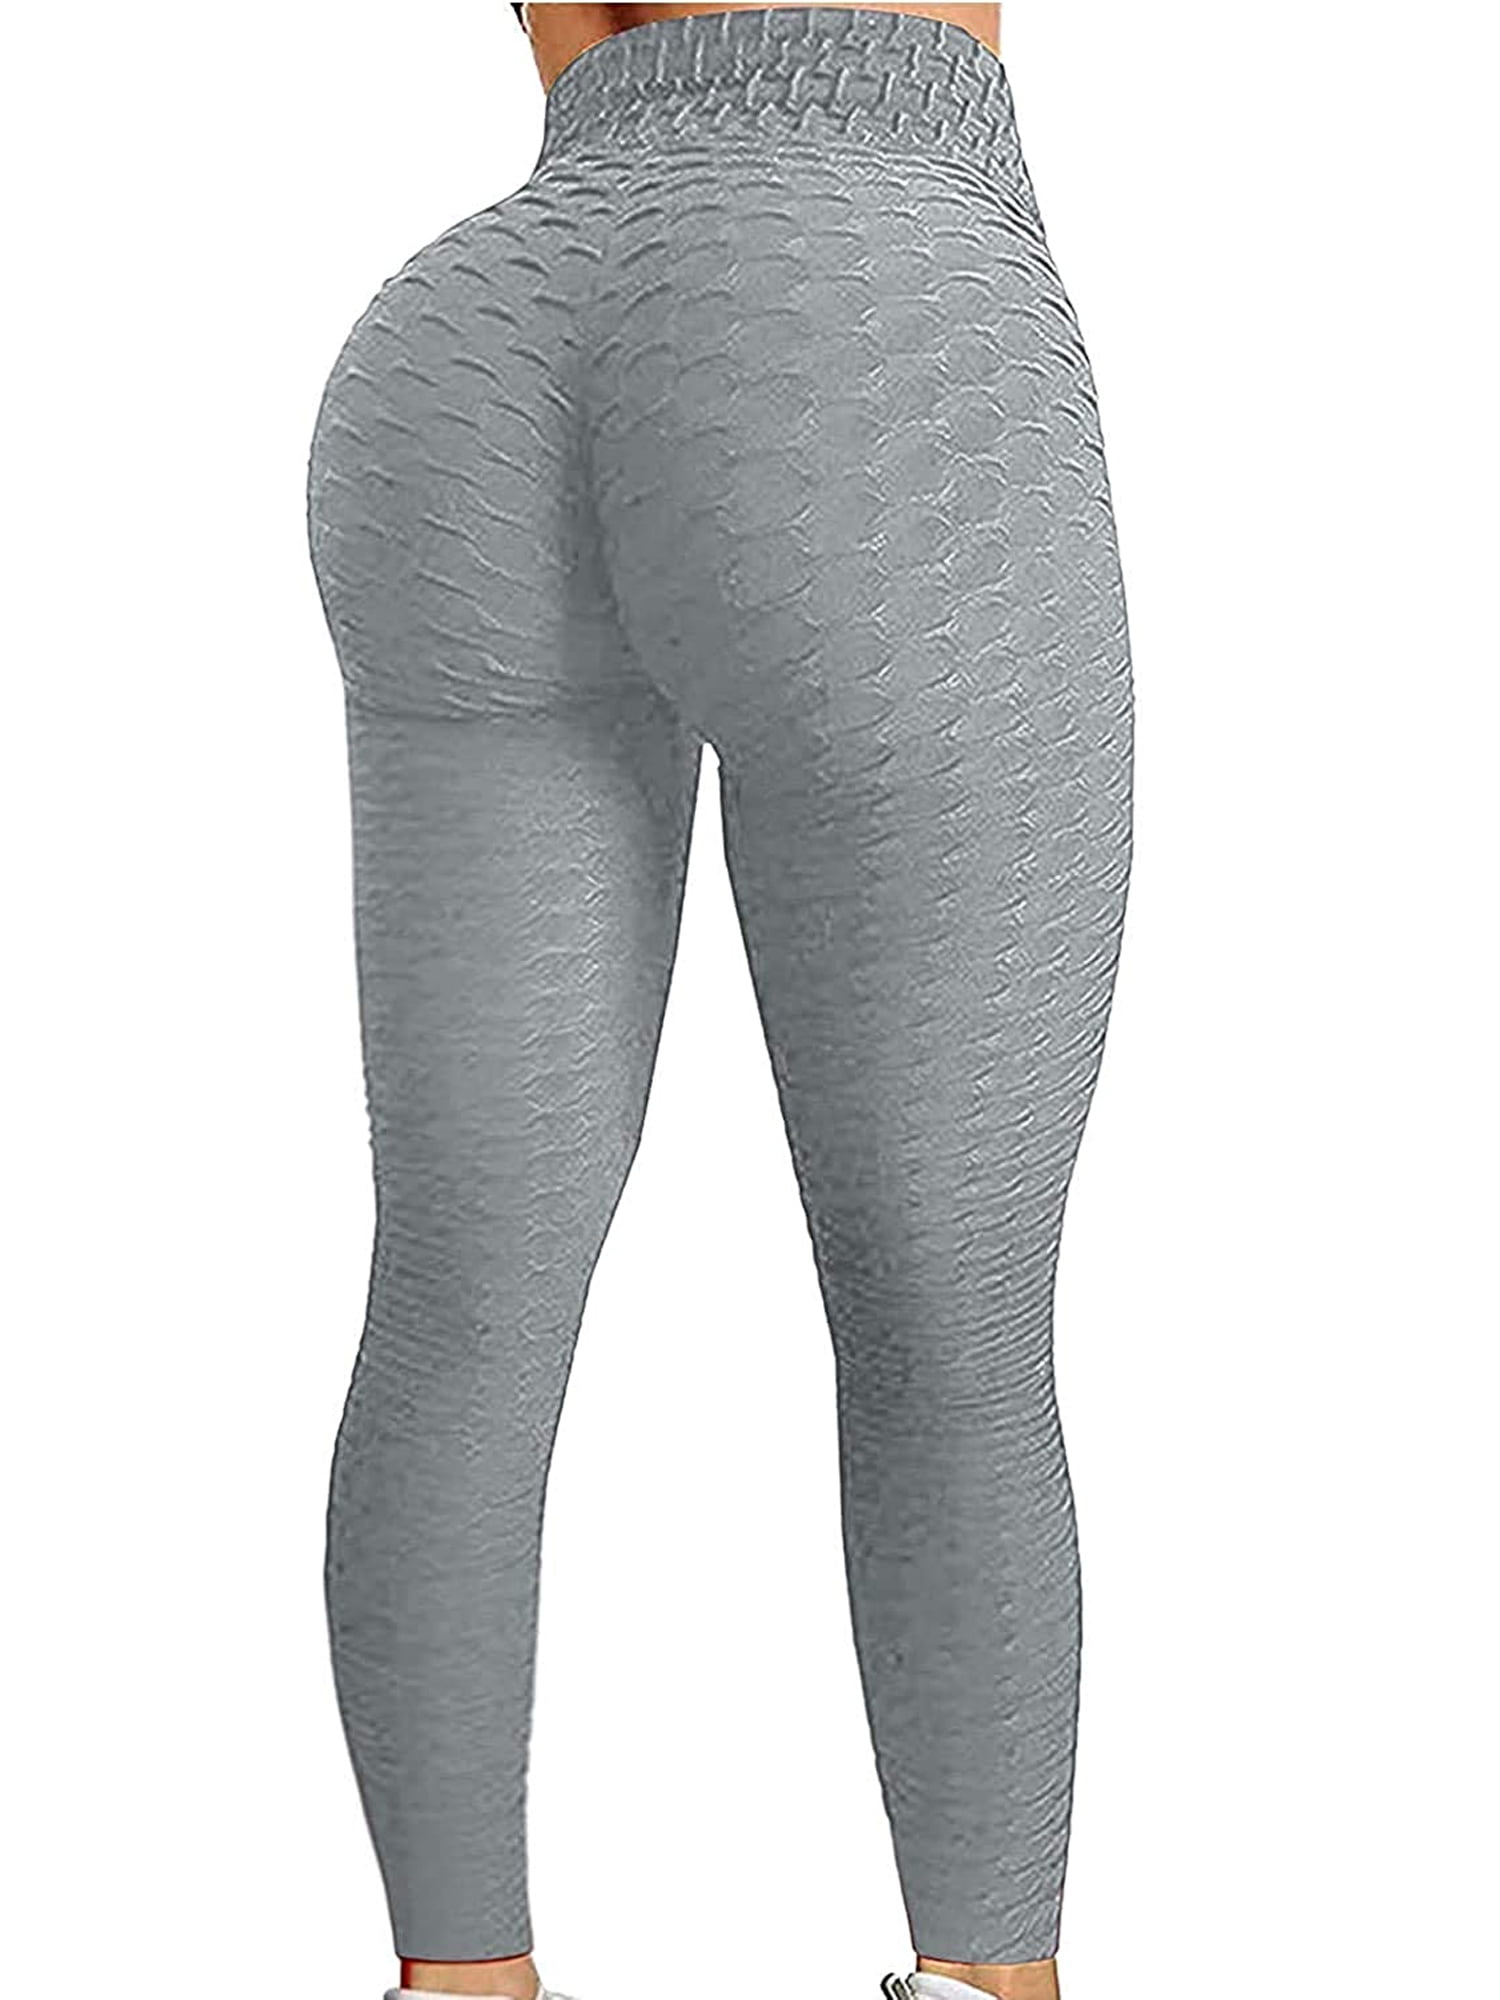 Elastic Women Yoga Gym Anti-Cellulite Sport Leggings Fitness Pants Trousers